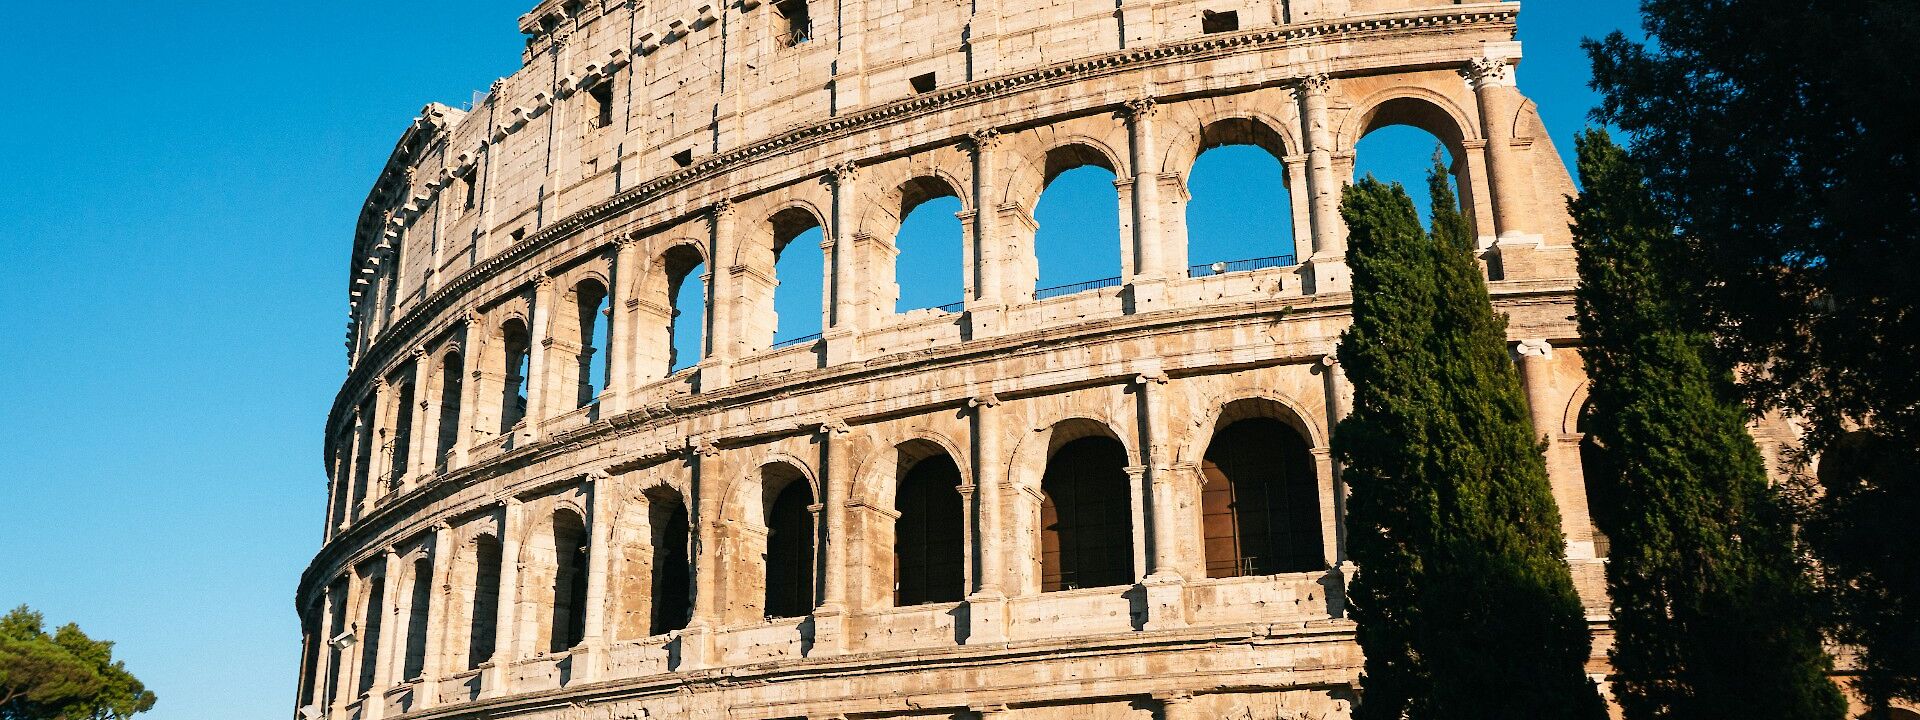 Colosseum, Rome, Italy. Unsplash: Fabio Fistarol